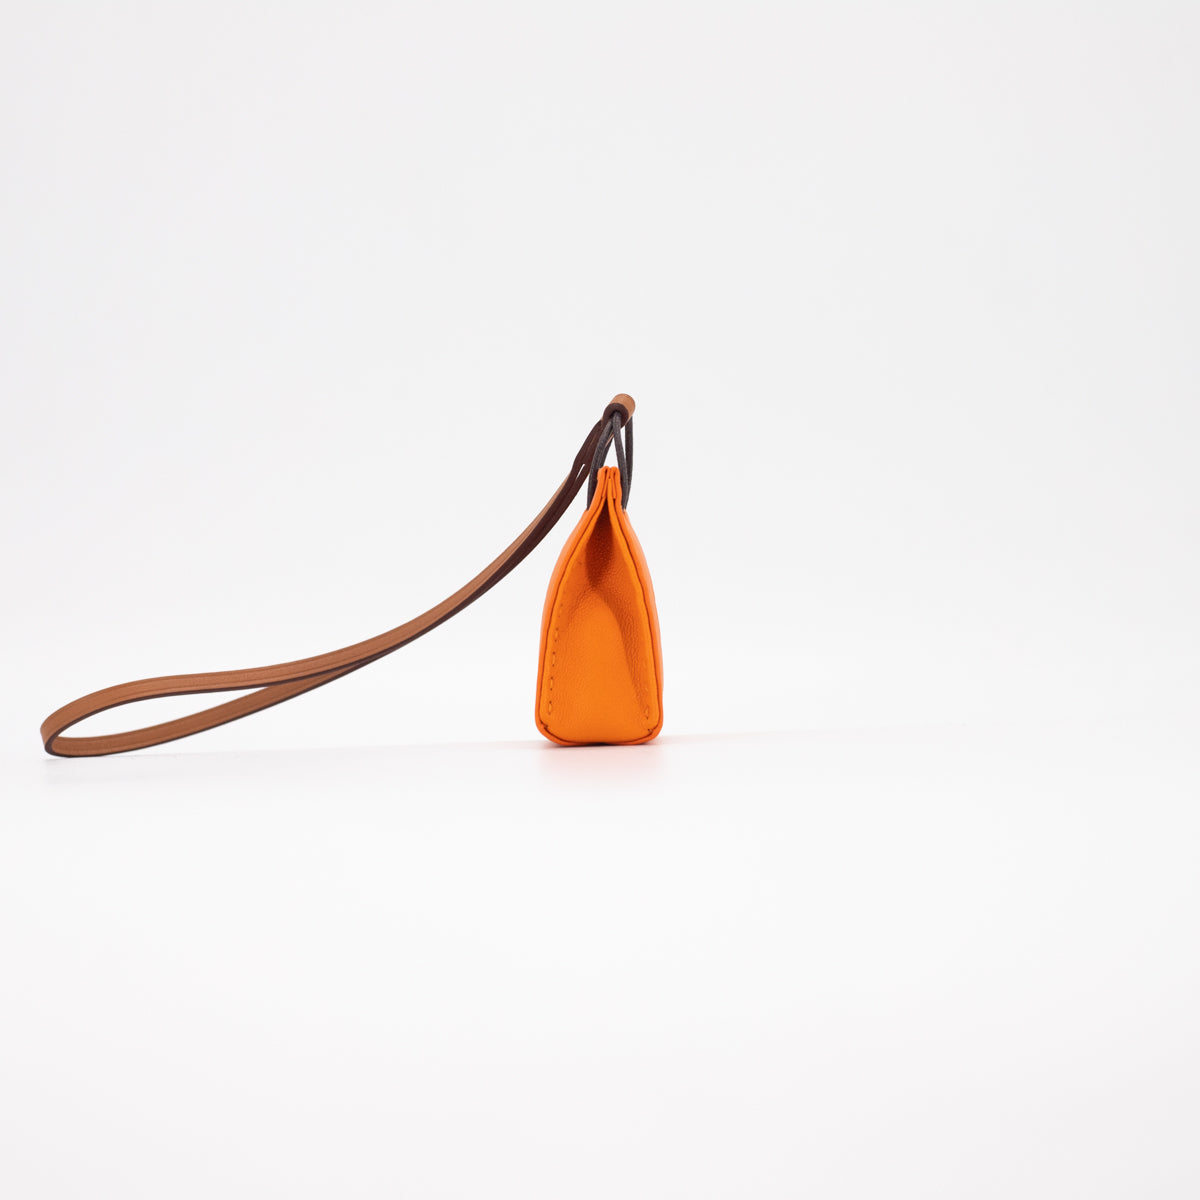 Hermès Orange Bag Charm